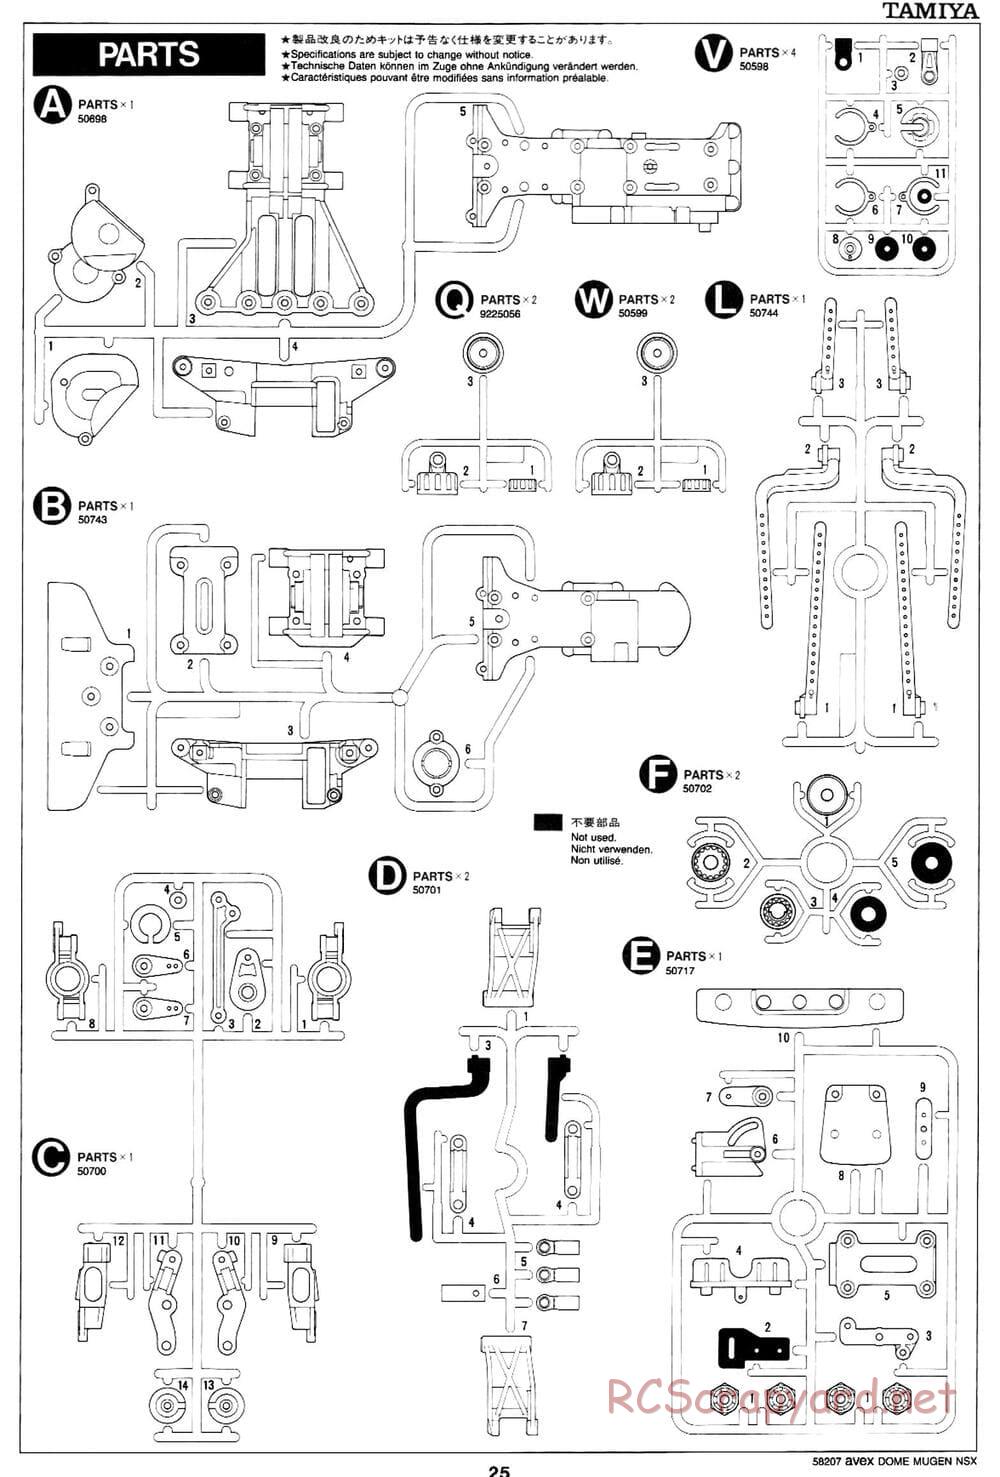 Tamiya - Avex Dome Mugen NSX - TA-03R Chassis - Manual - Page 25